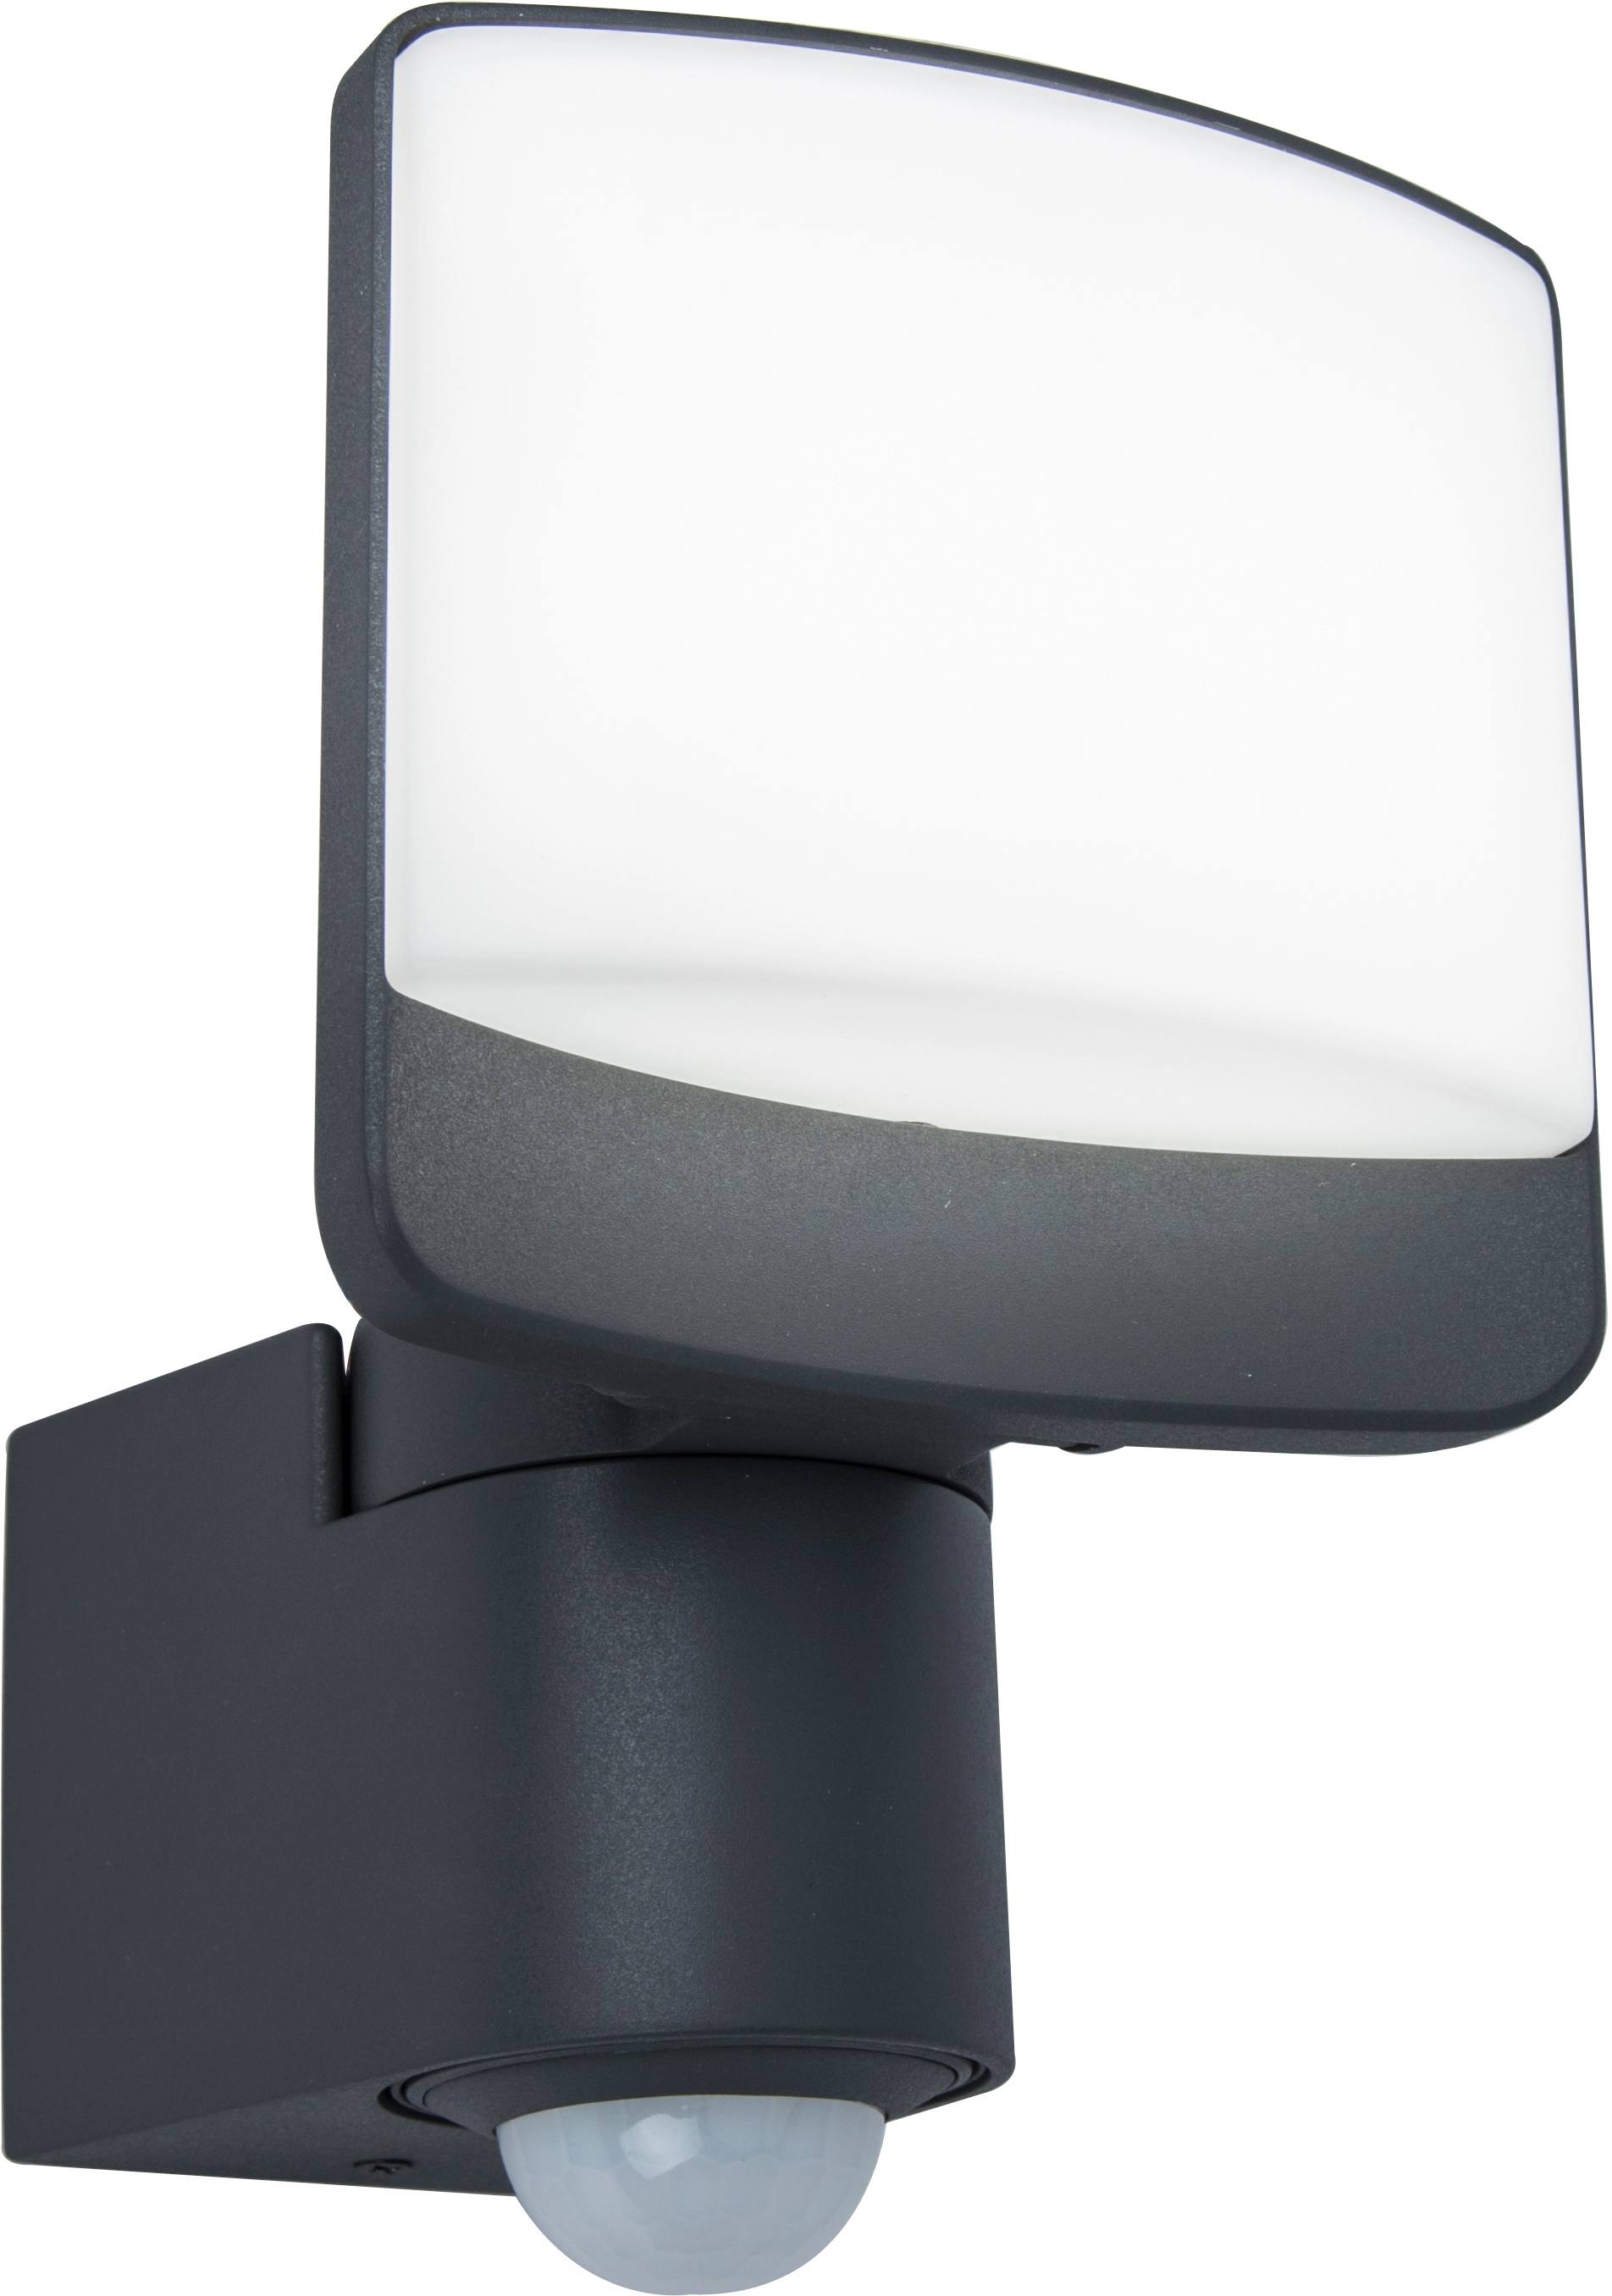 Lutec LED-Strahler Sunshine schwenkbarer Kopf kaufen bei OBI